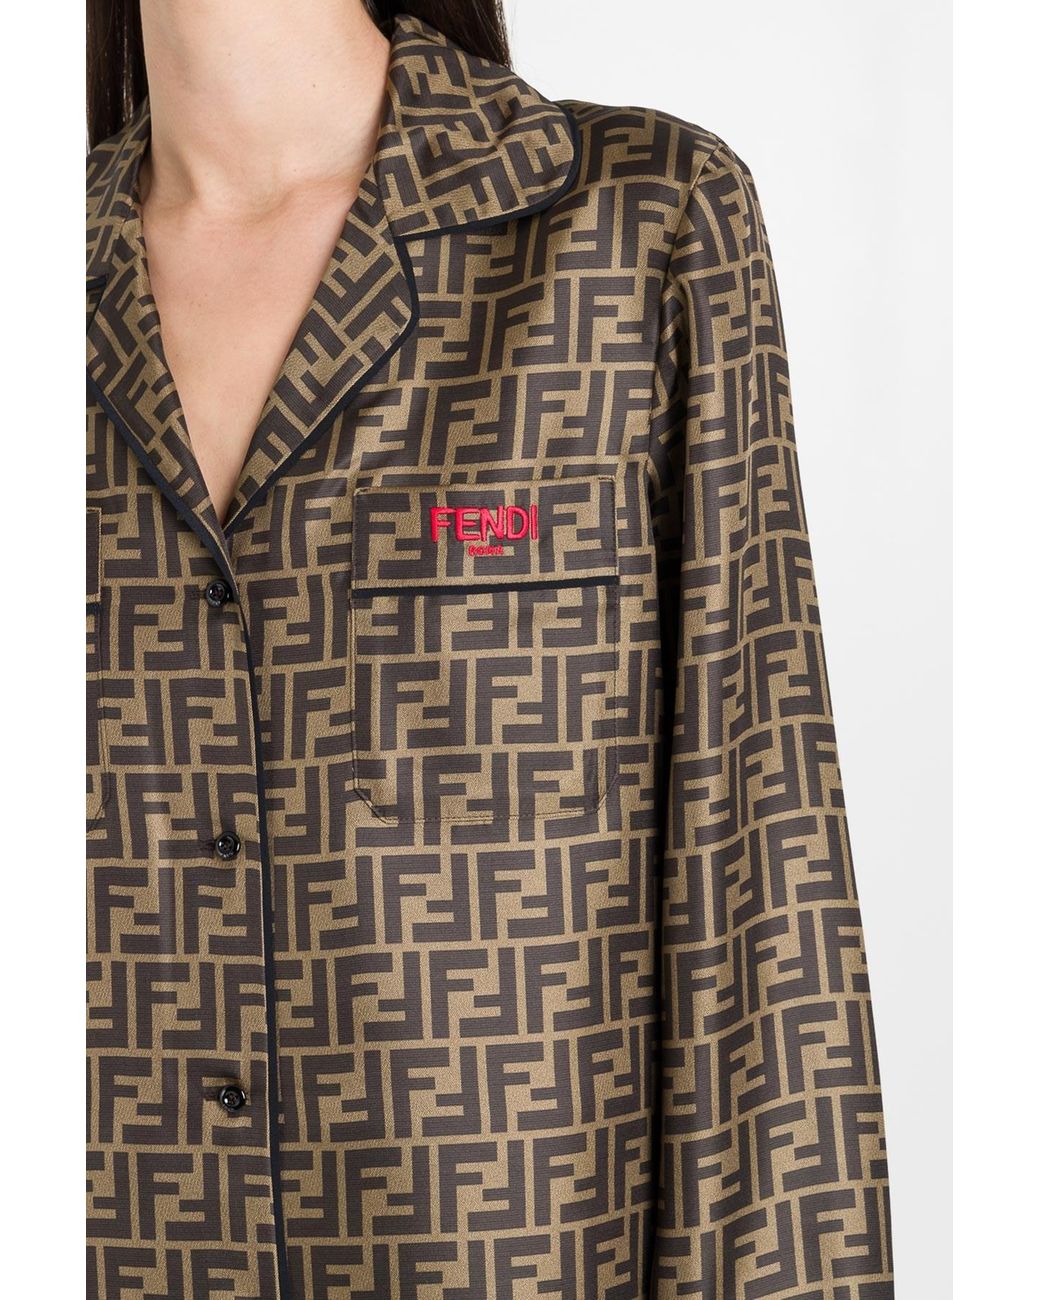 Fendi Ff Pyjama Shirt in Brown | Lyst